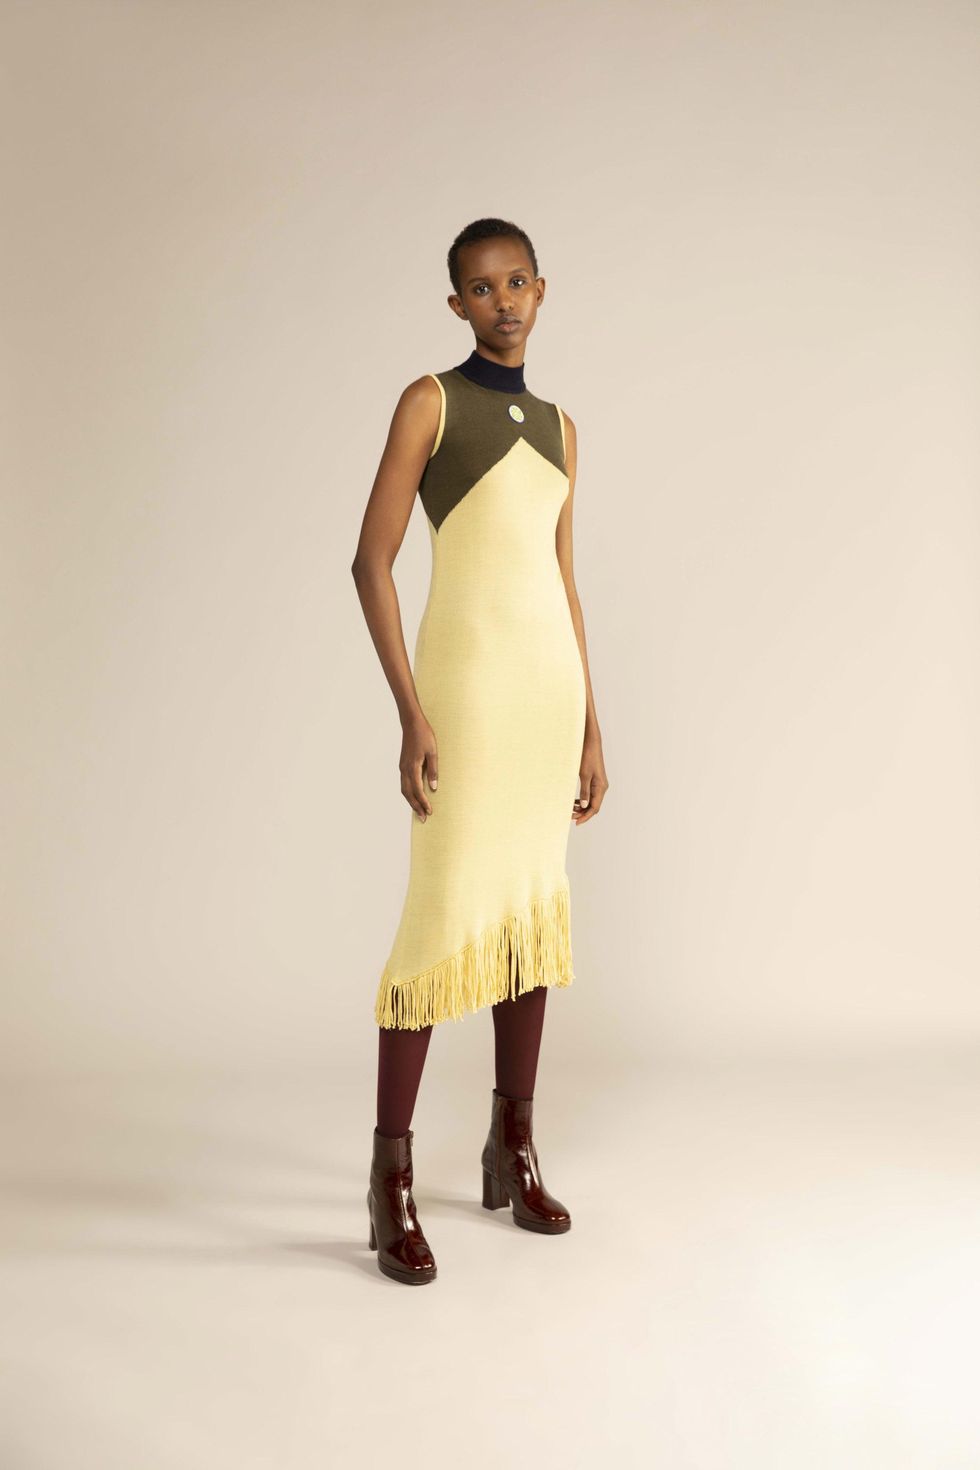 Lukhanyo Mdingi: the fashion designer building a community with